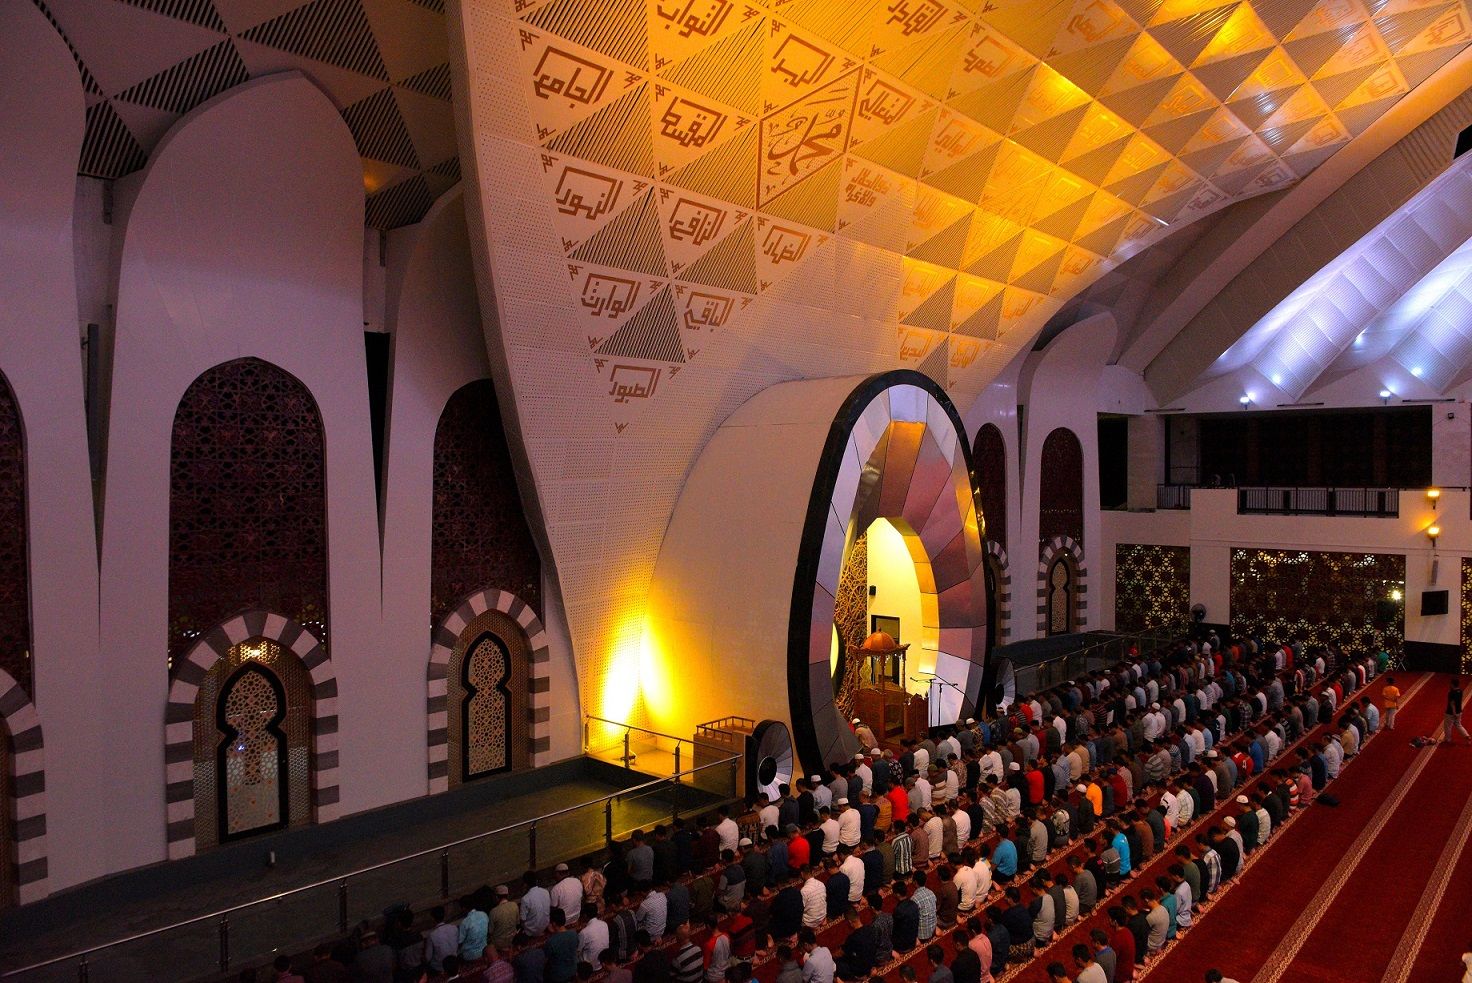 Teknologi pada lampu yang digunakan membuat masjid tidak panas meski banyak jamaah.